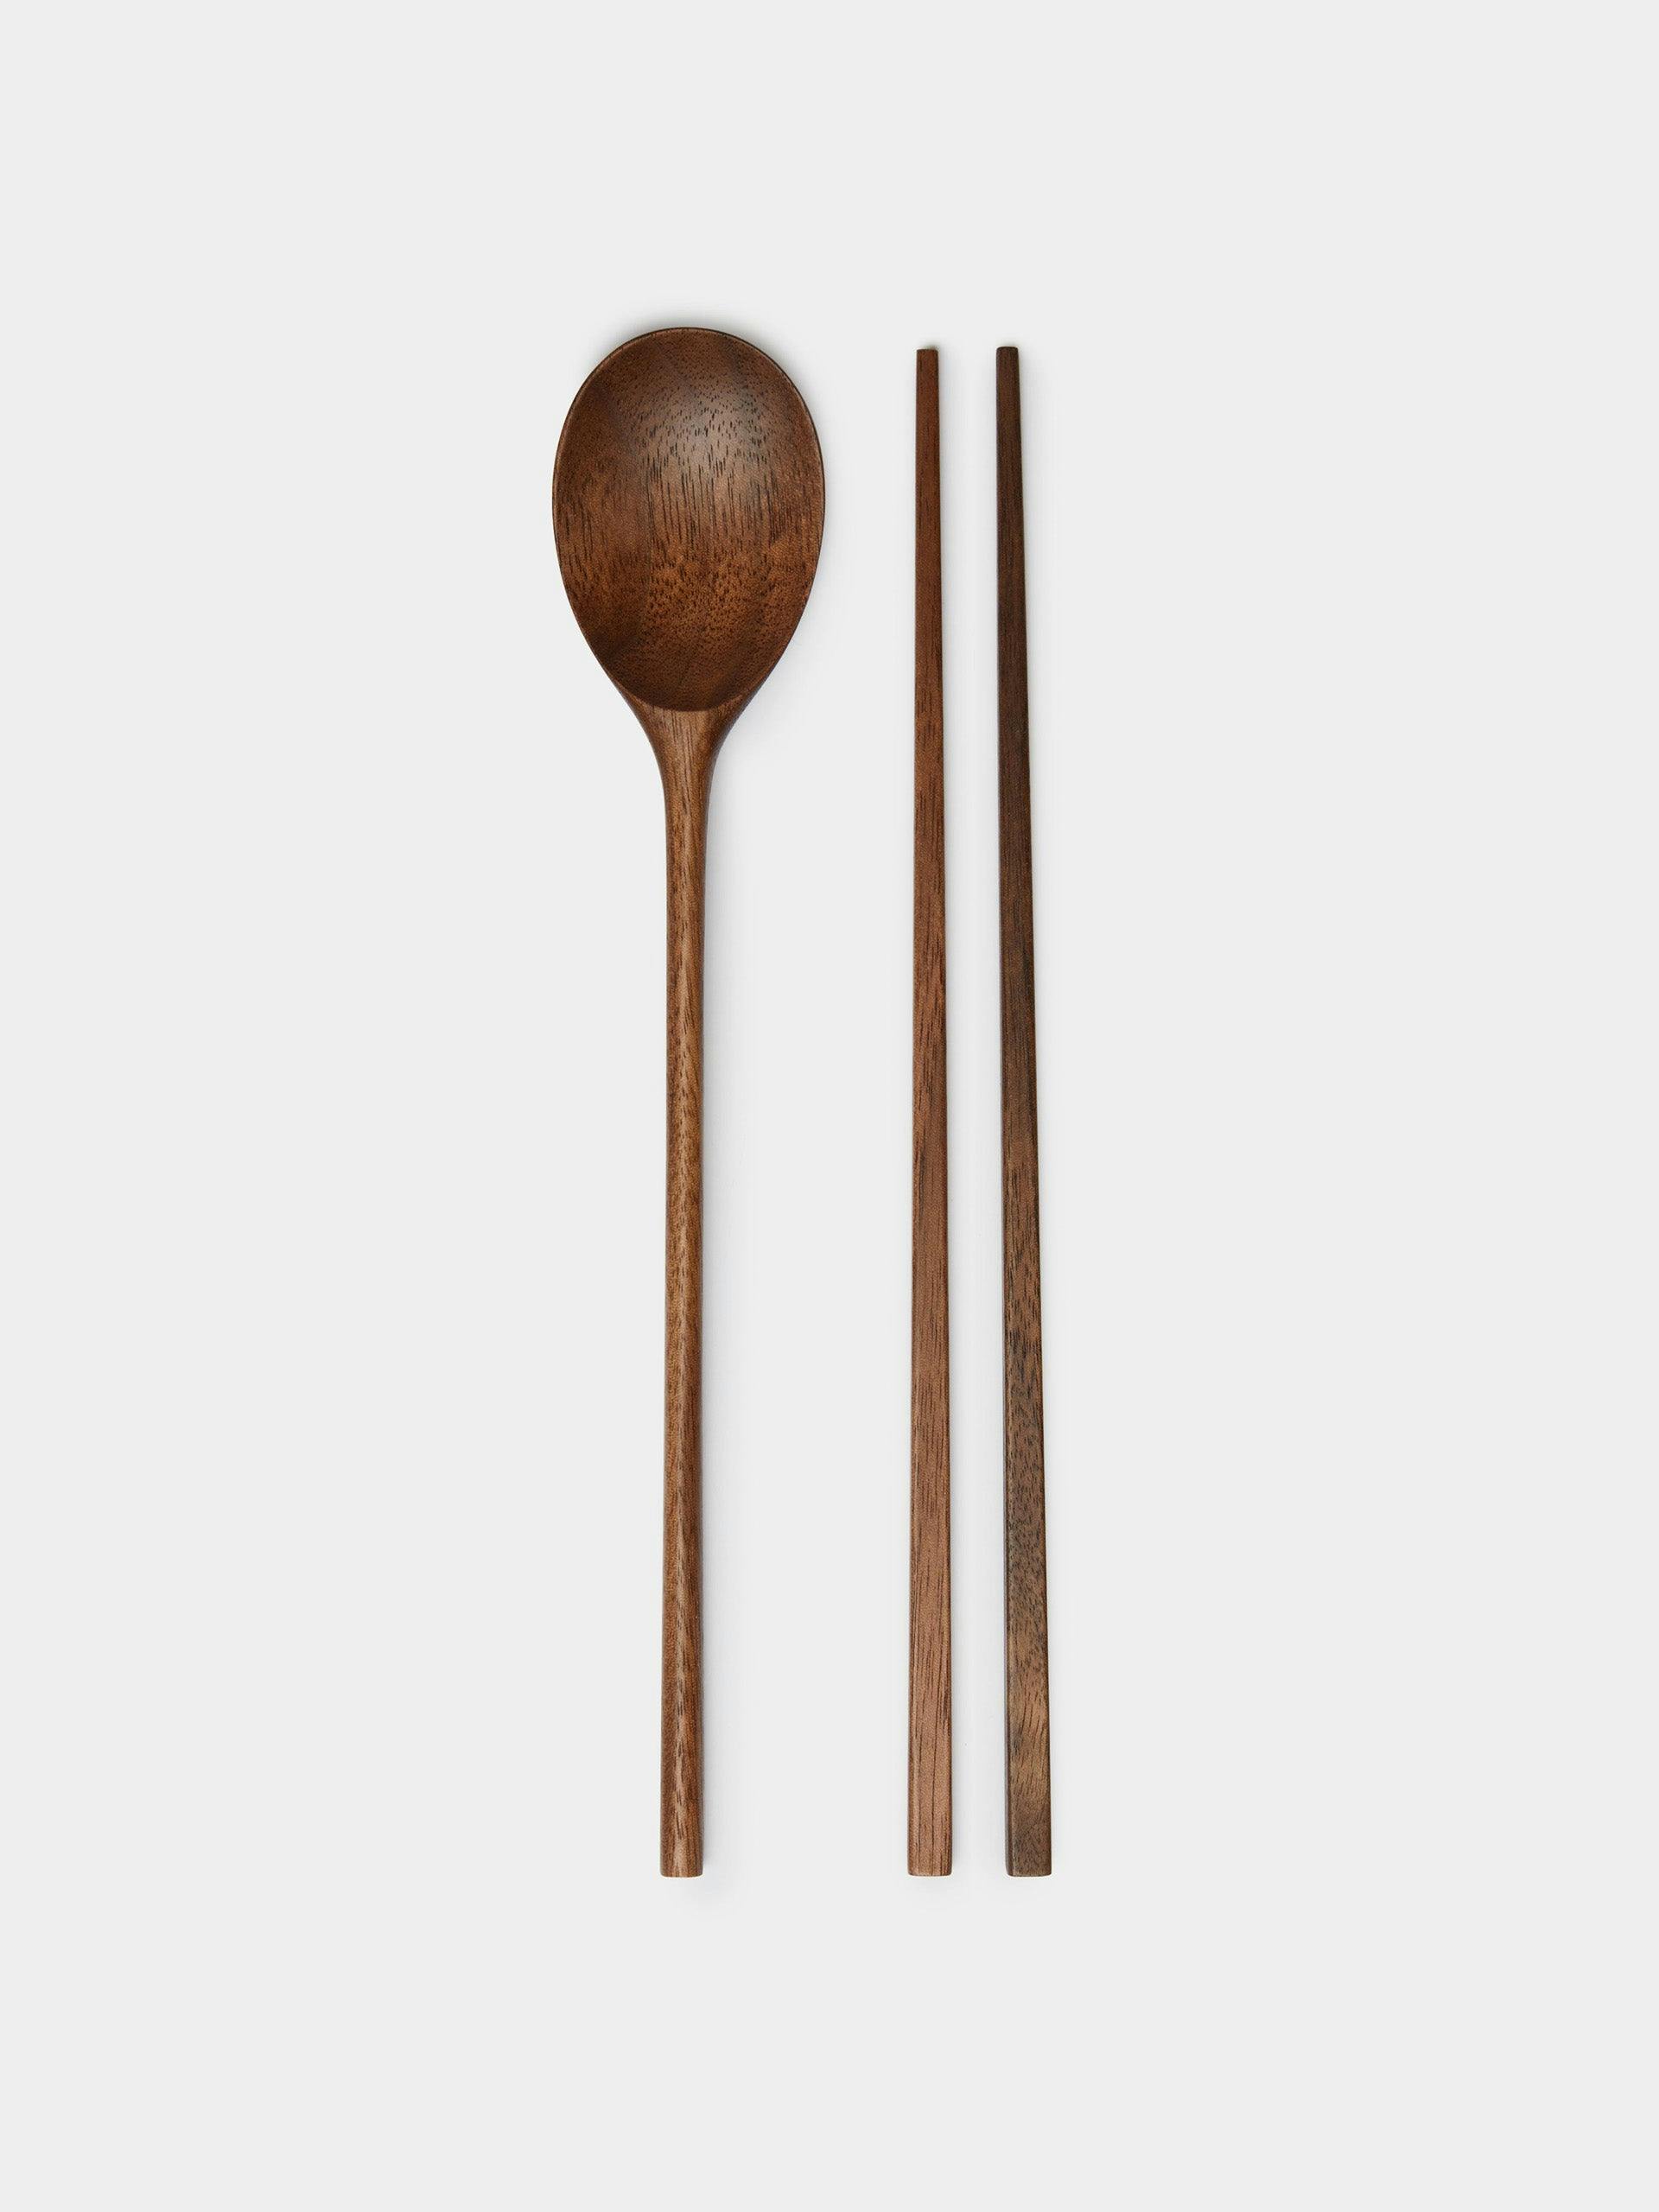 Walnut spoon and chopsticks set